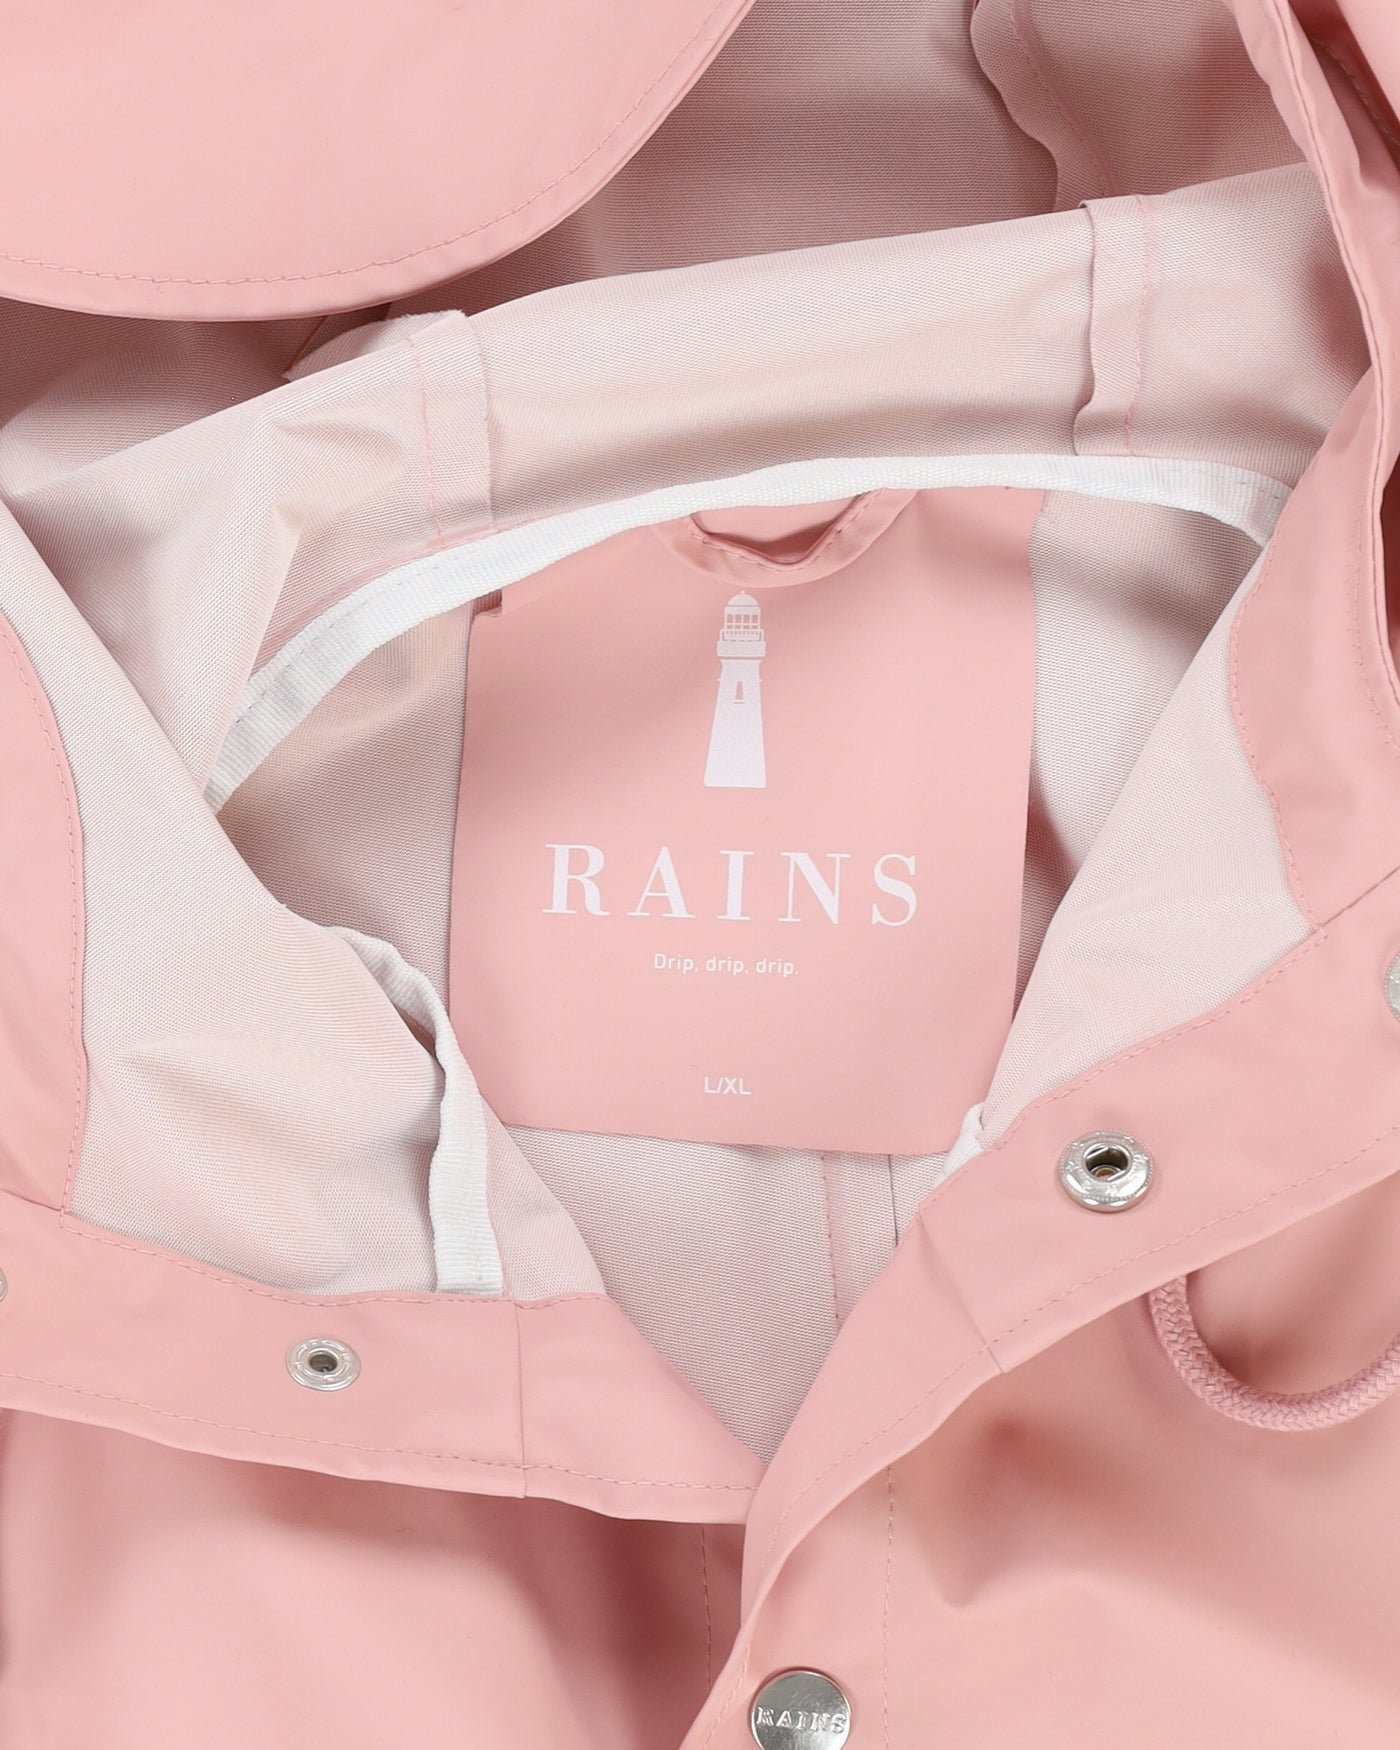 Rains Pink Long Hooded Rain Jacket - XL